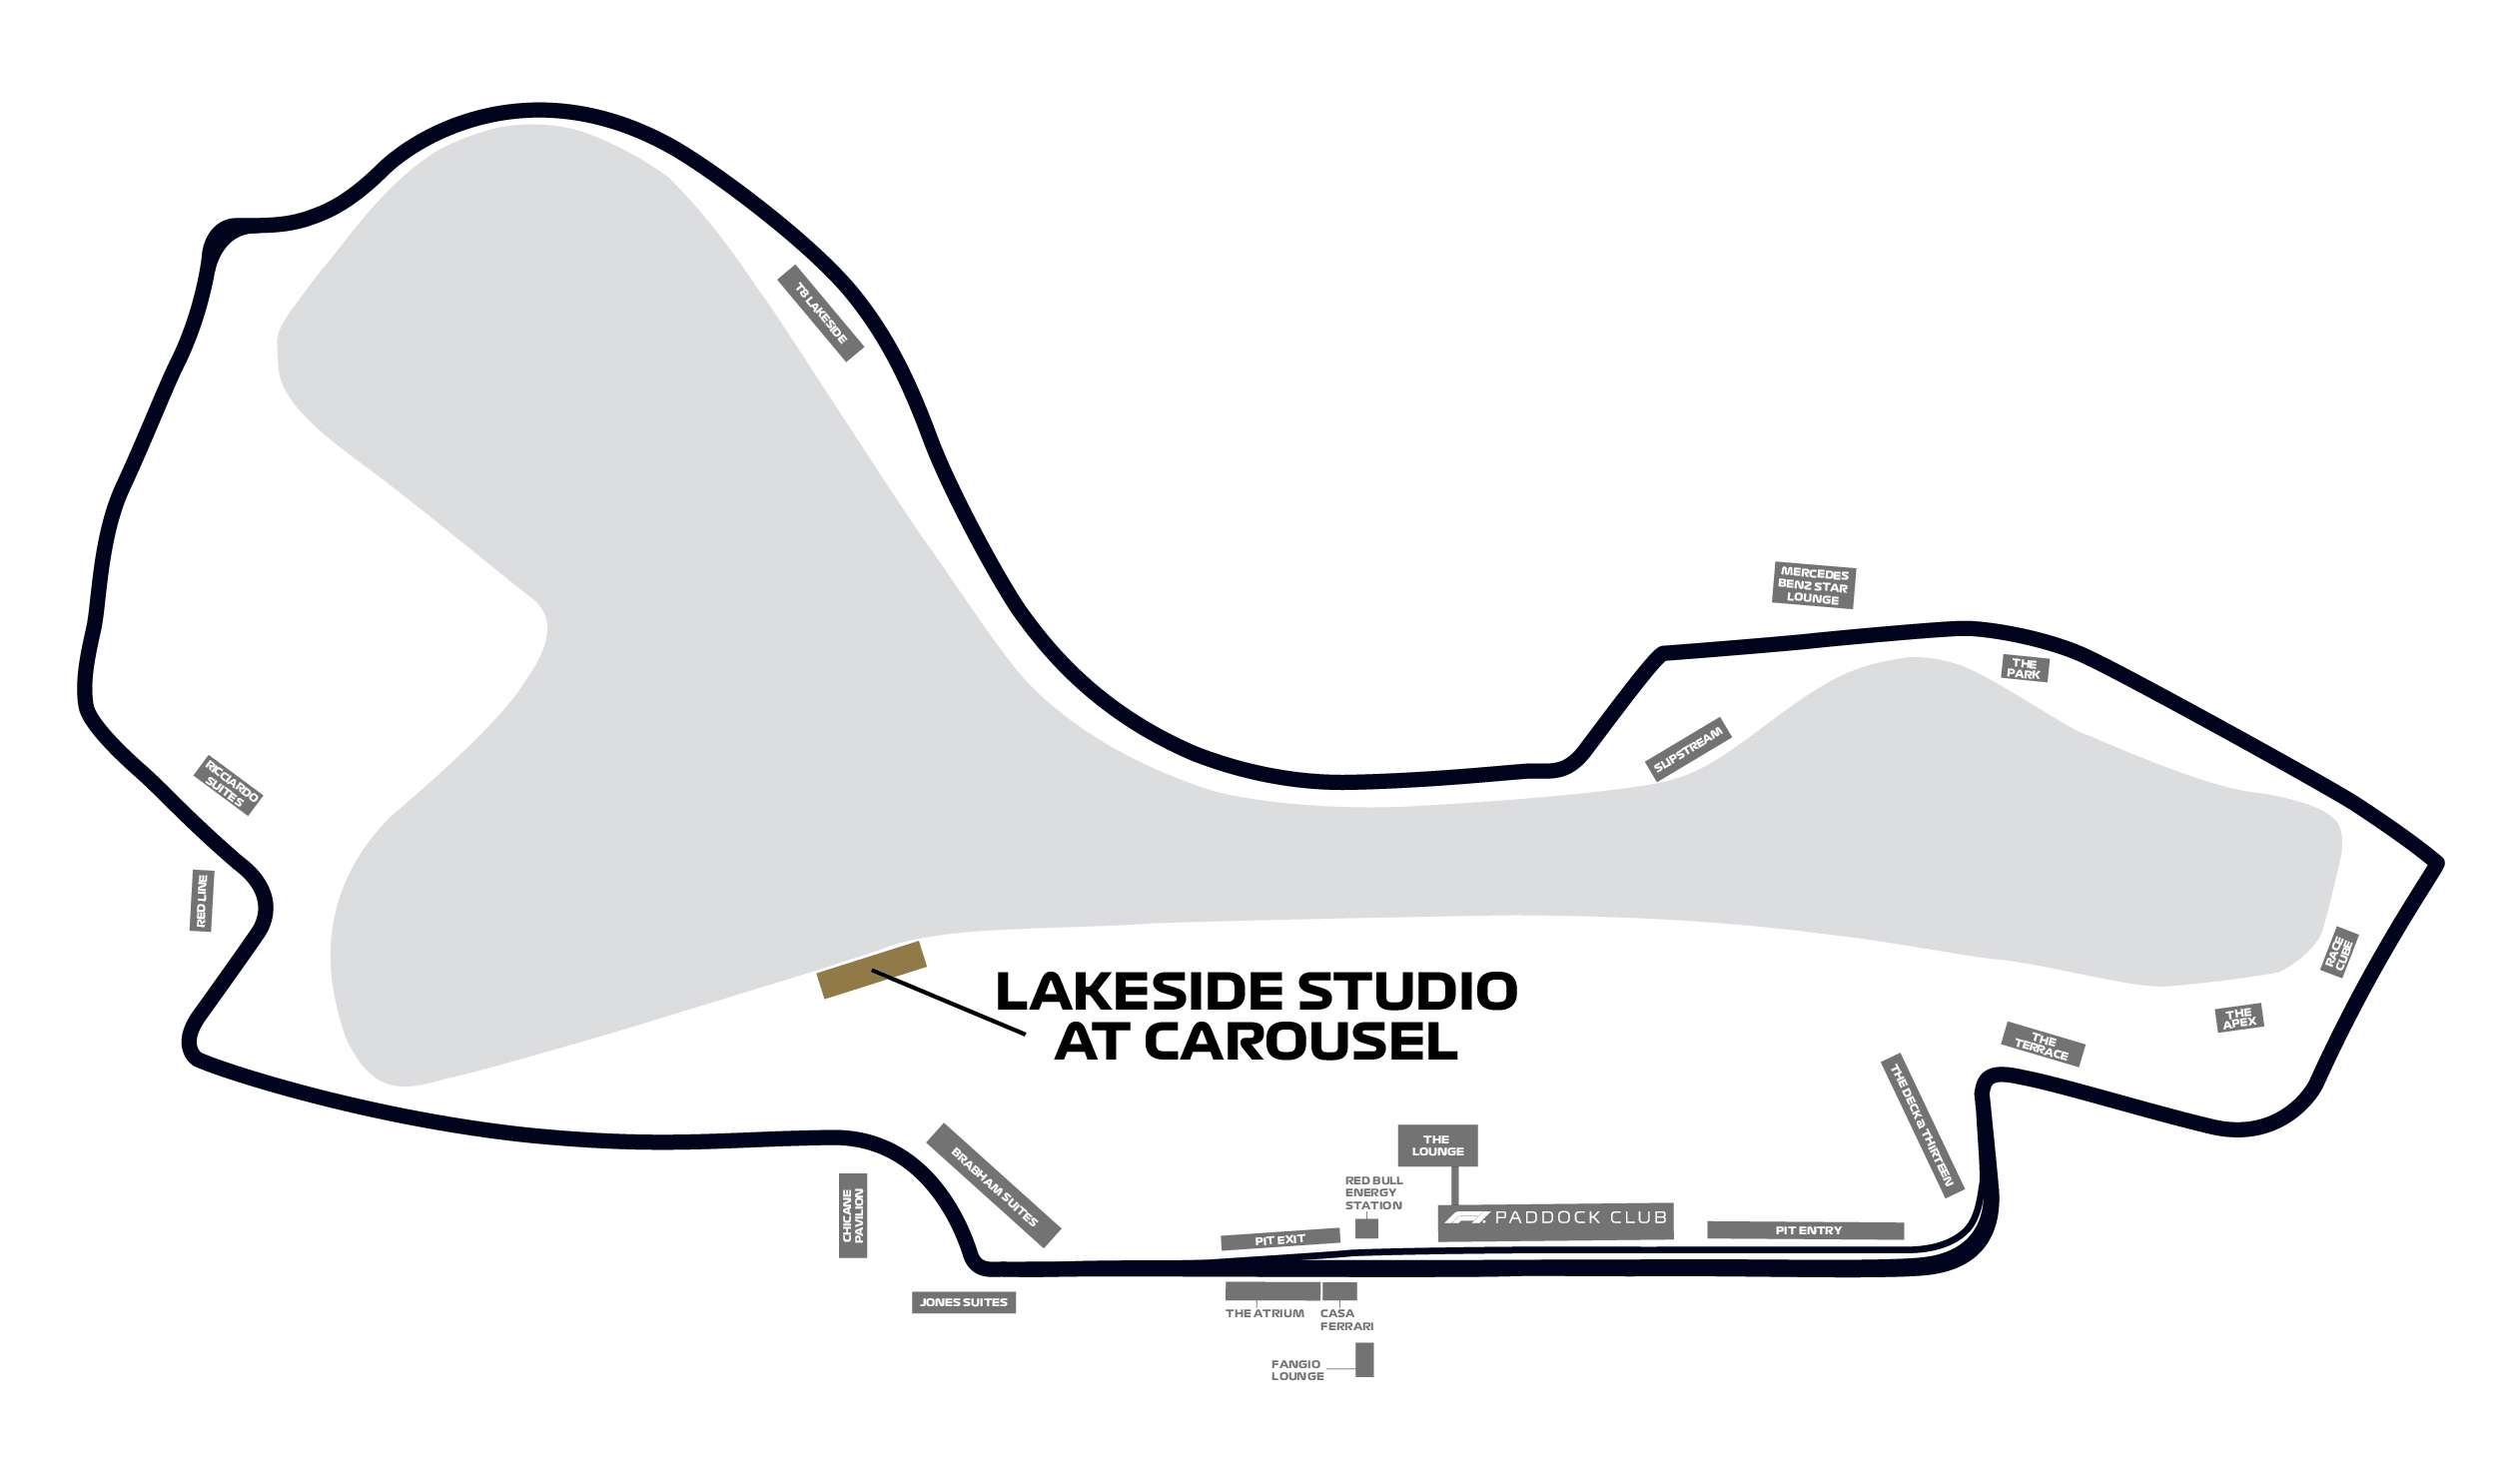 Map of Lakeside Studio at Carousel